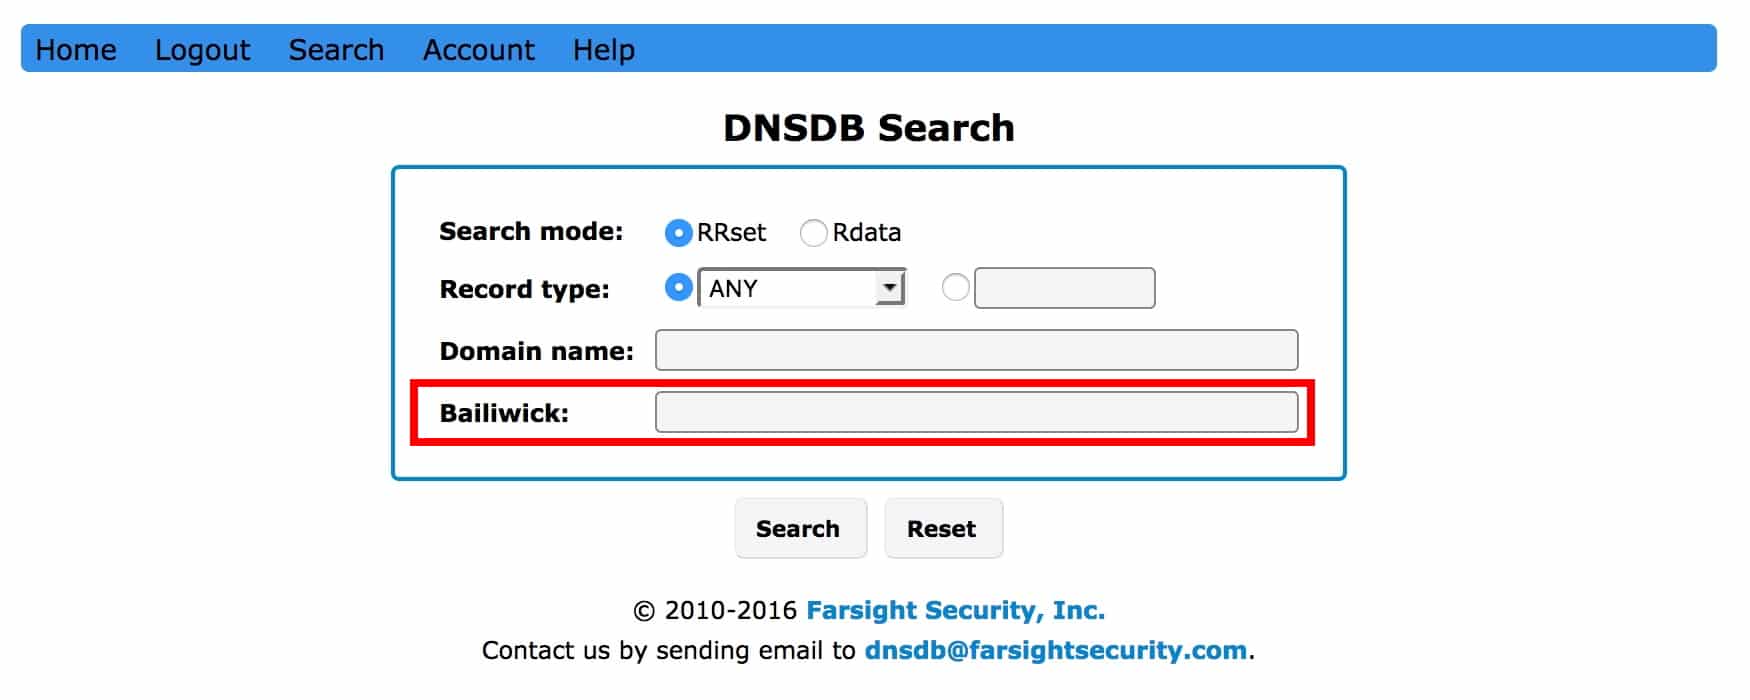 Sample DNSDB Search Web Interface